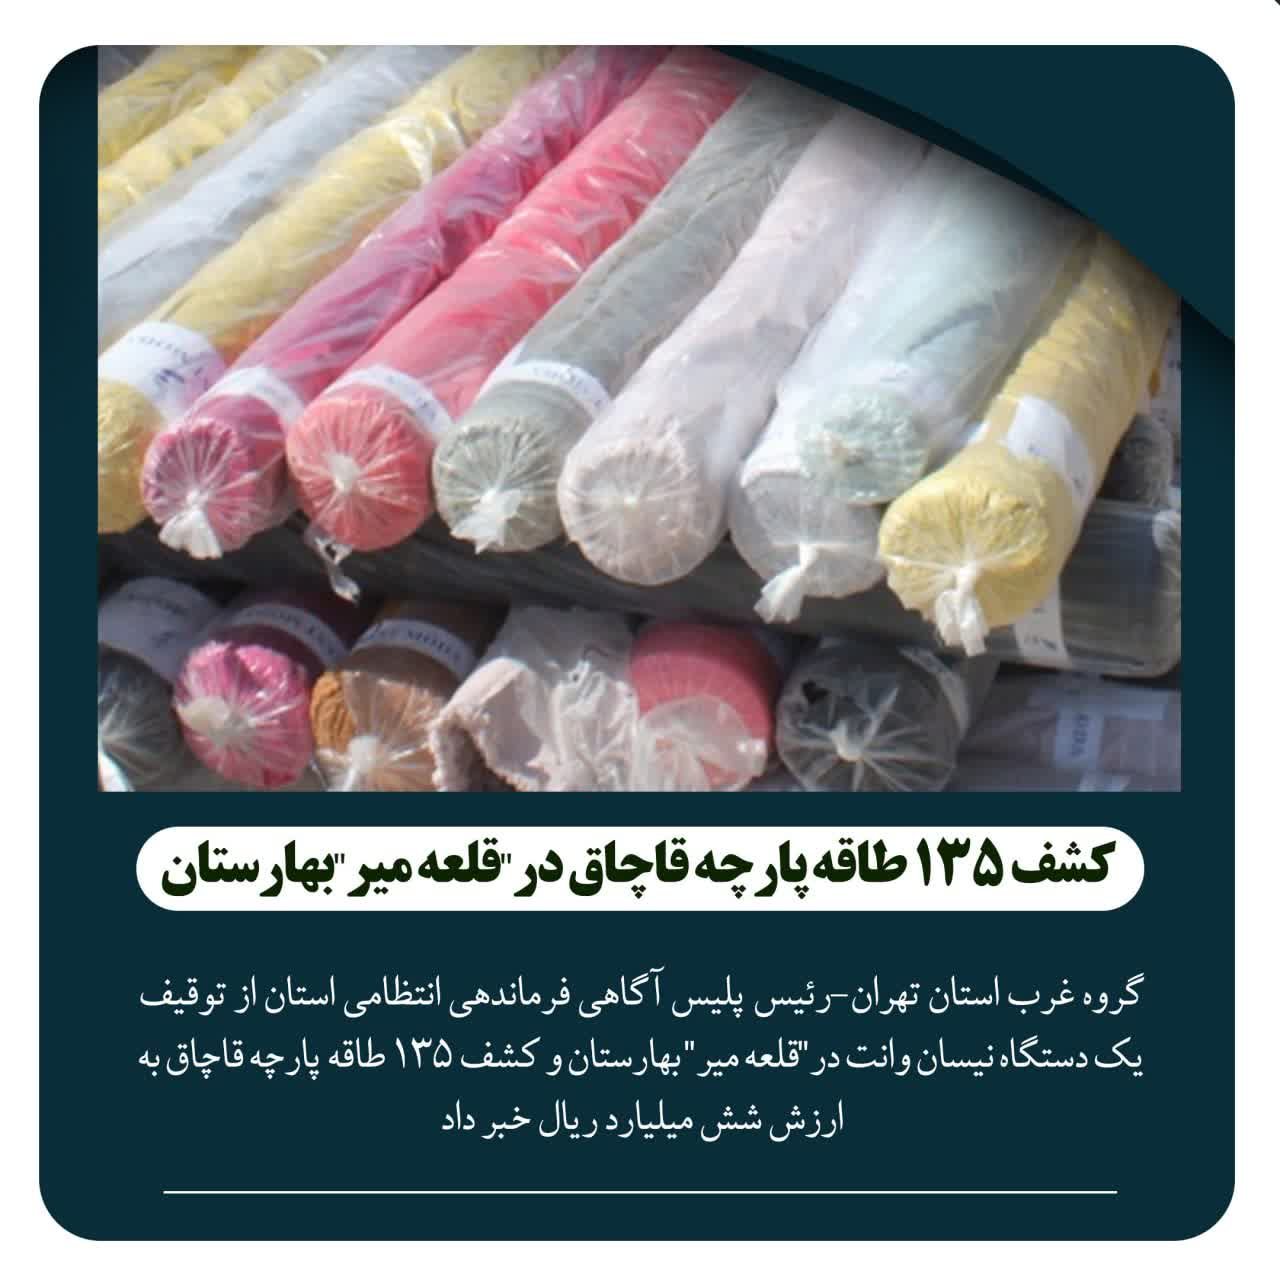 کشف ۲۲۵ قلم کارتخوان قاچاق در شهرک امیریه شهریار